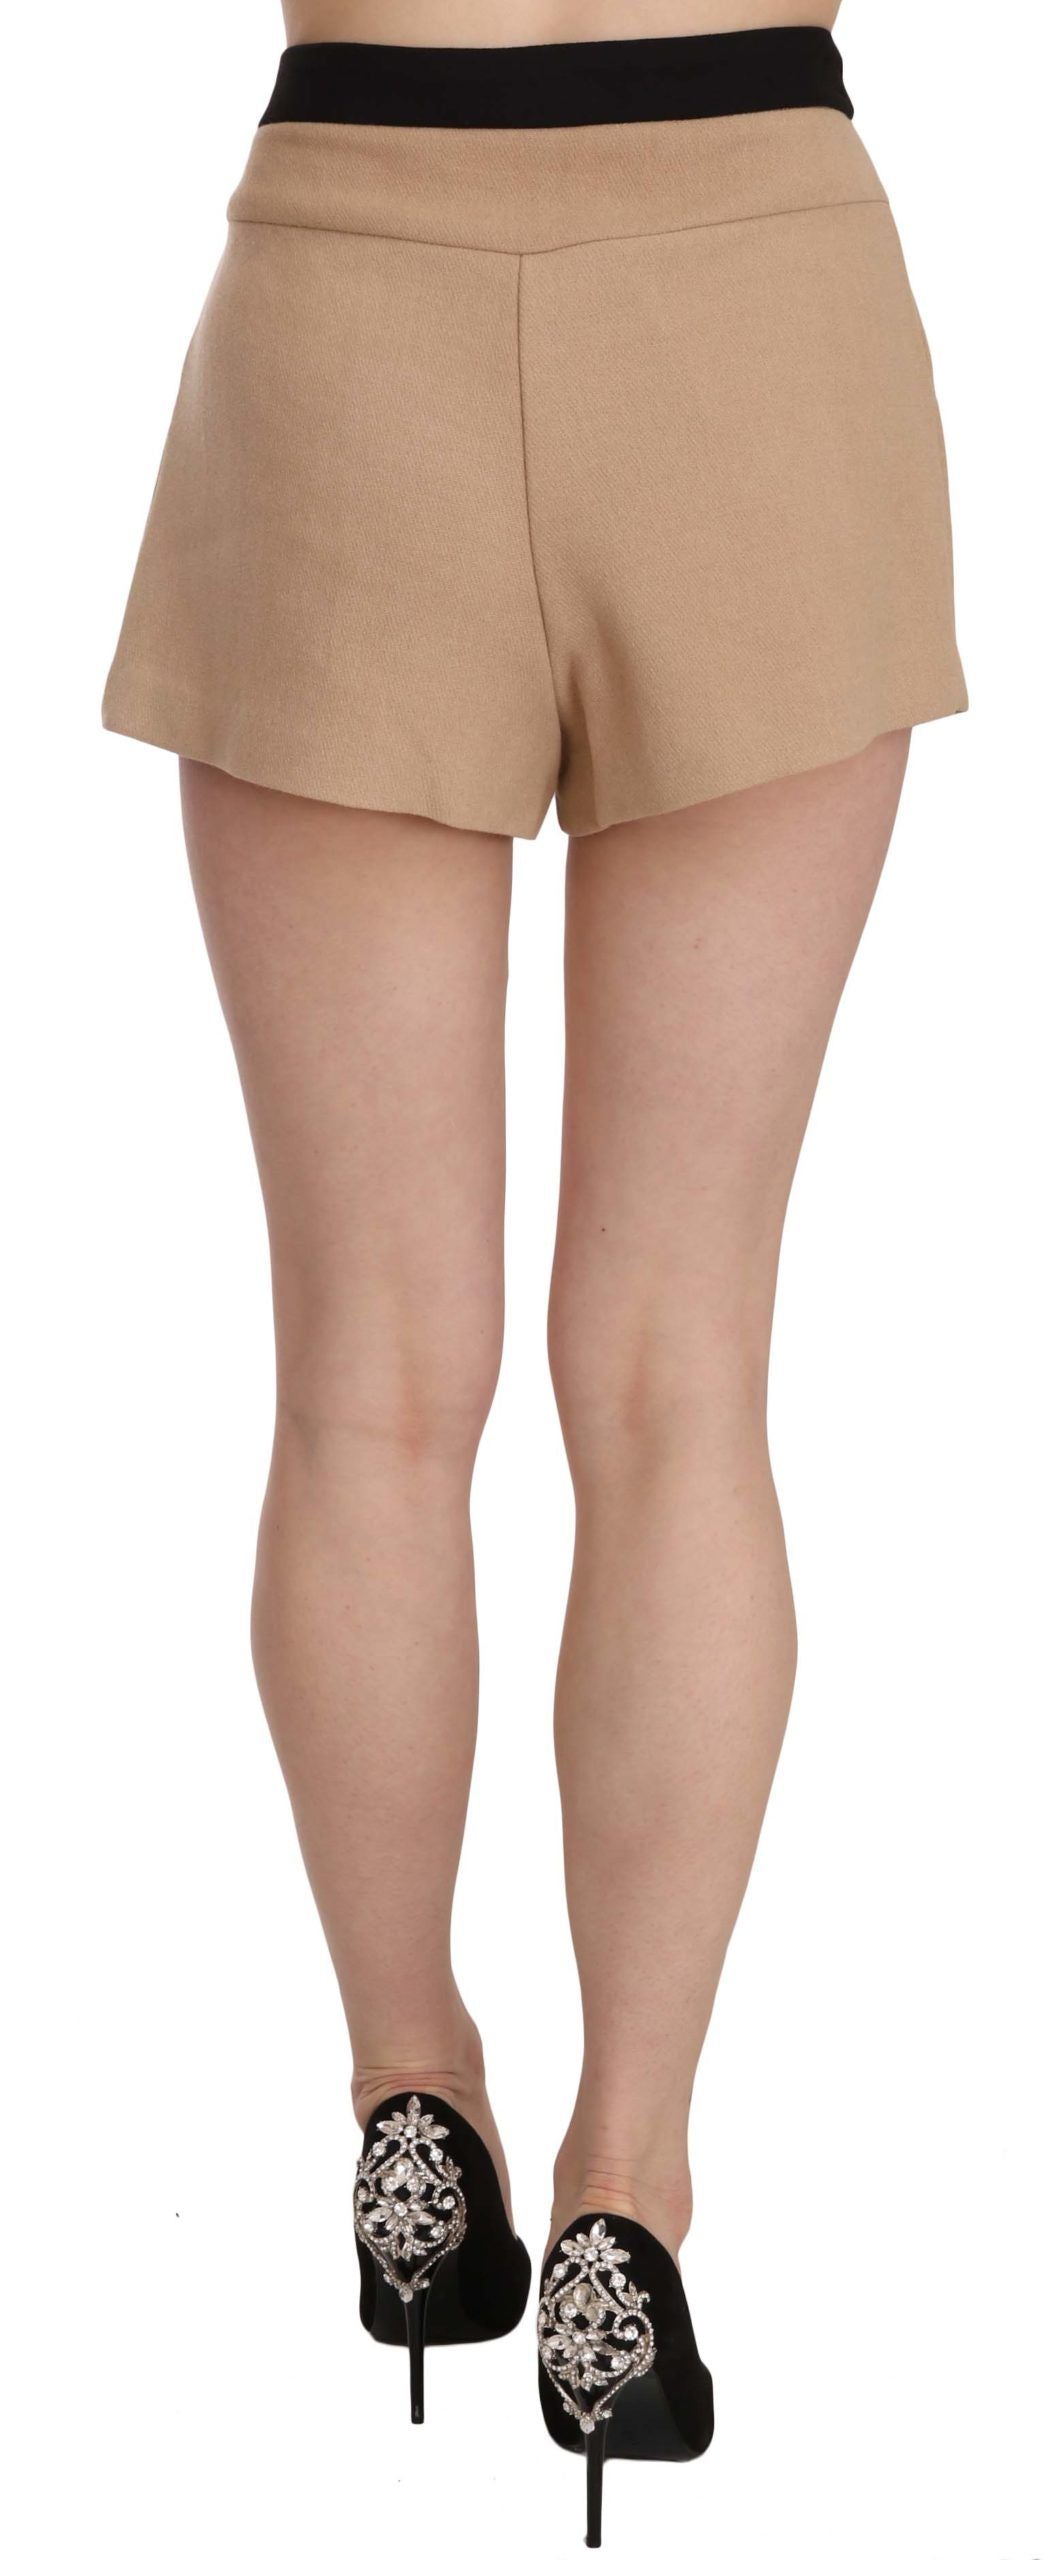 Kostüm National Shorts Beige Cotton Mid Taille Mini Short